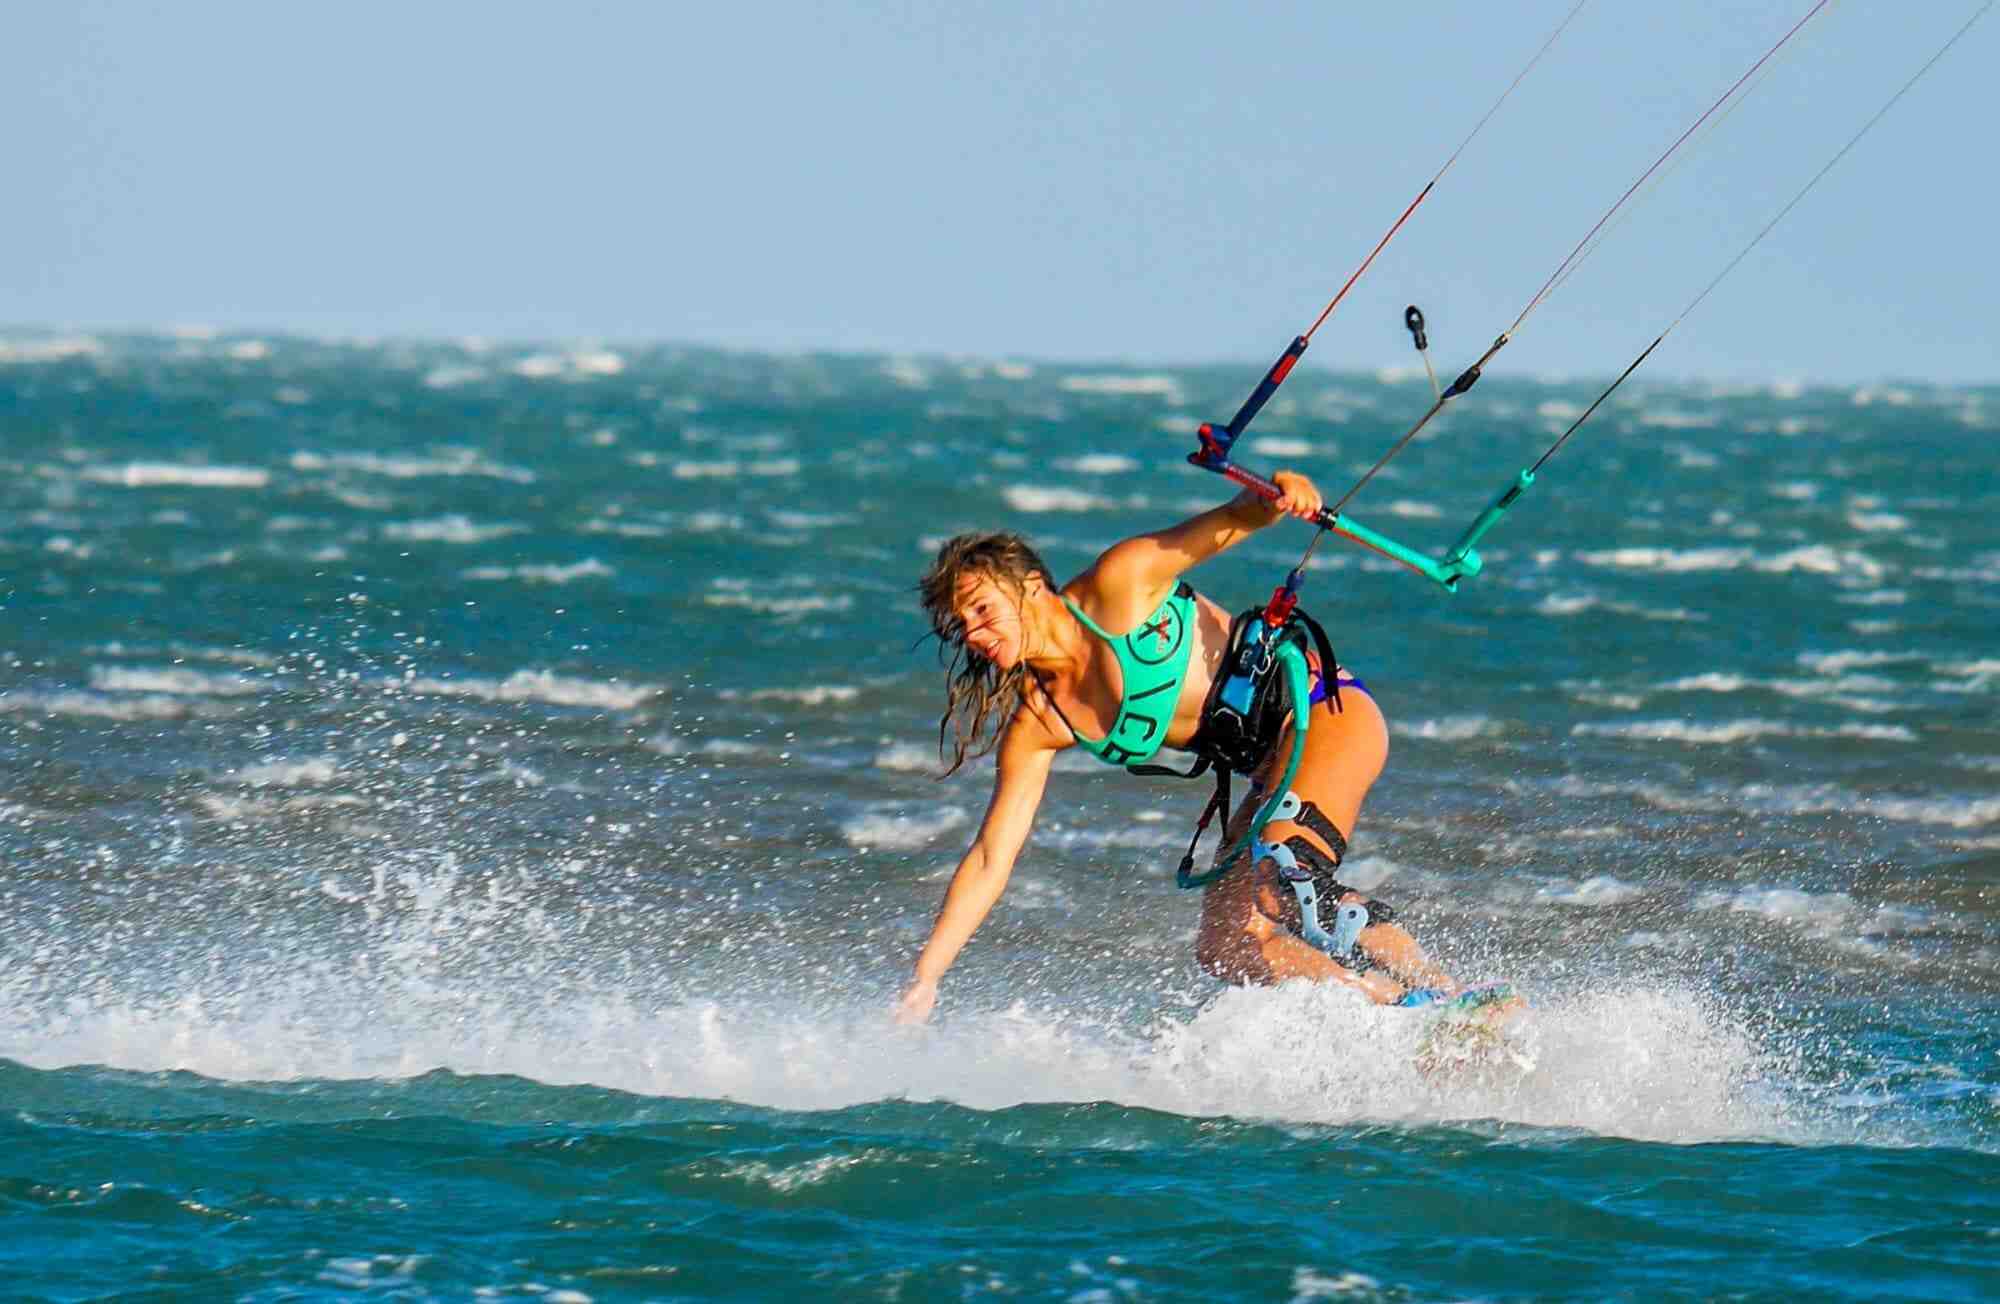 Où apprendre à faire du kitesurf ?